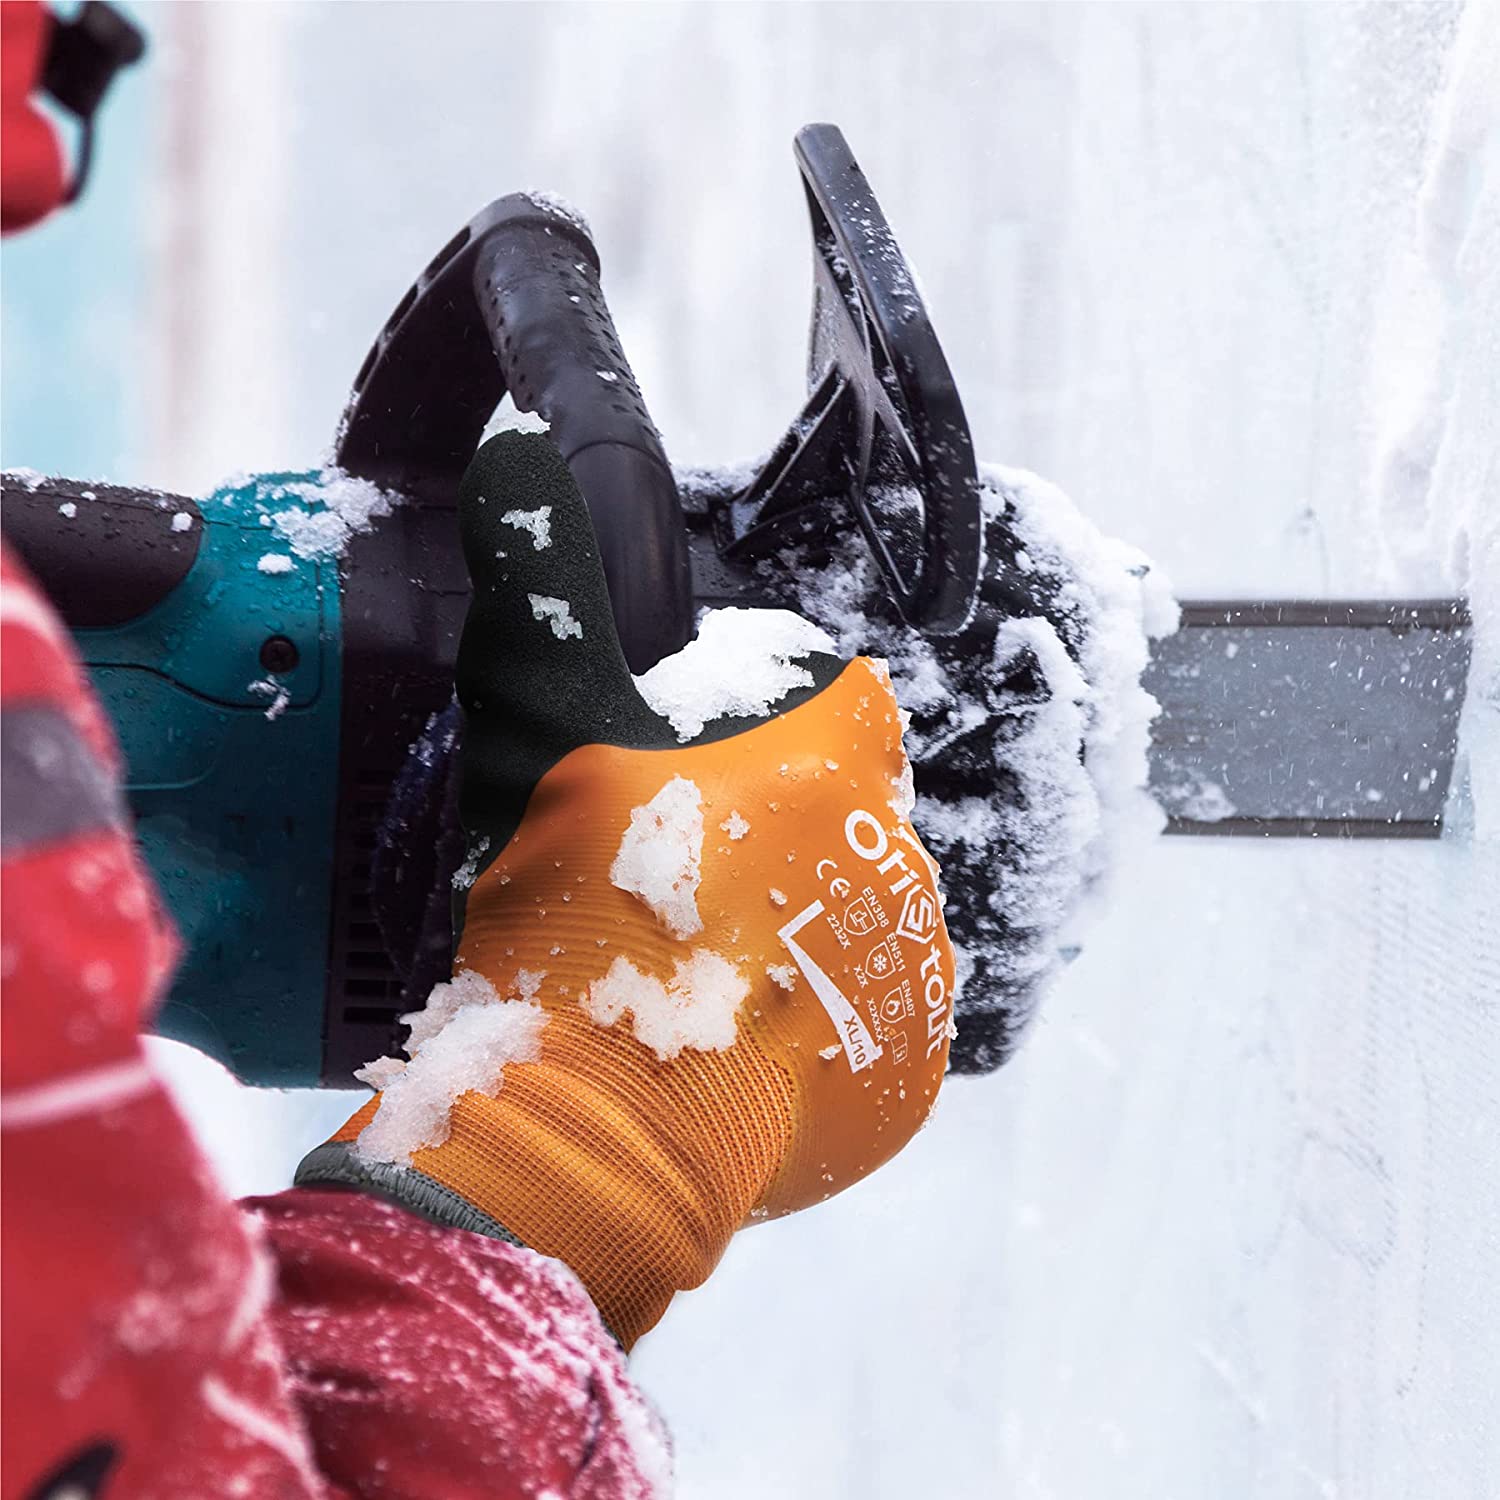 Winter Work Gloves, 100% Waterproof, Gloves for Heavy-duty Work in Cold Weather